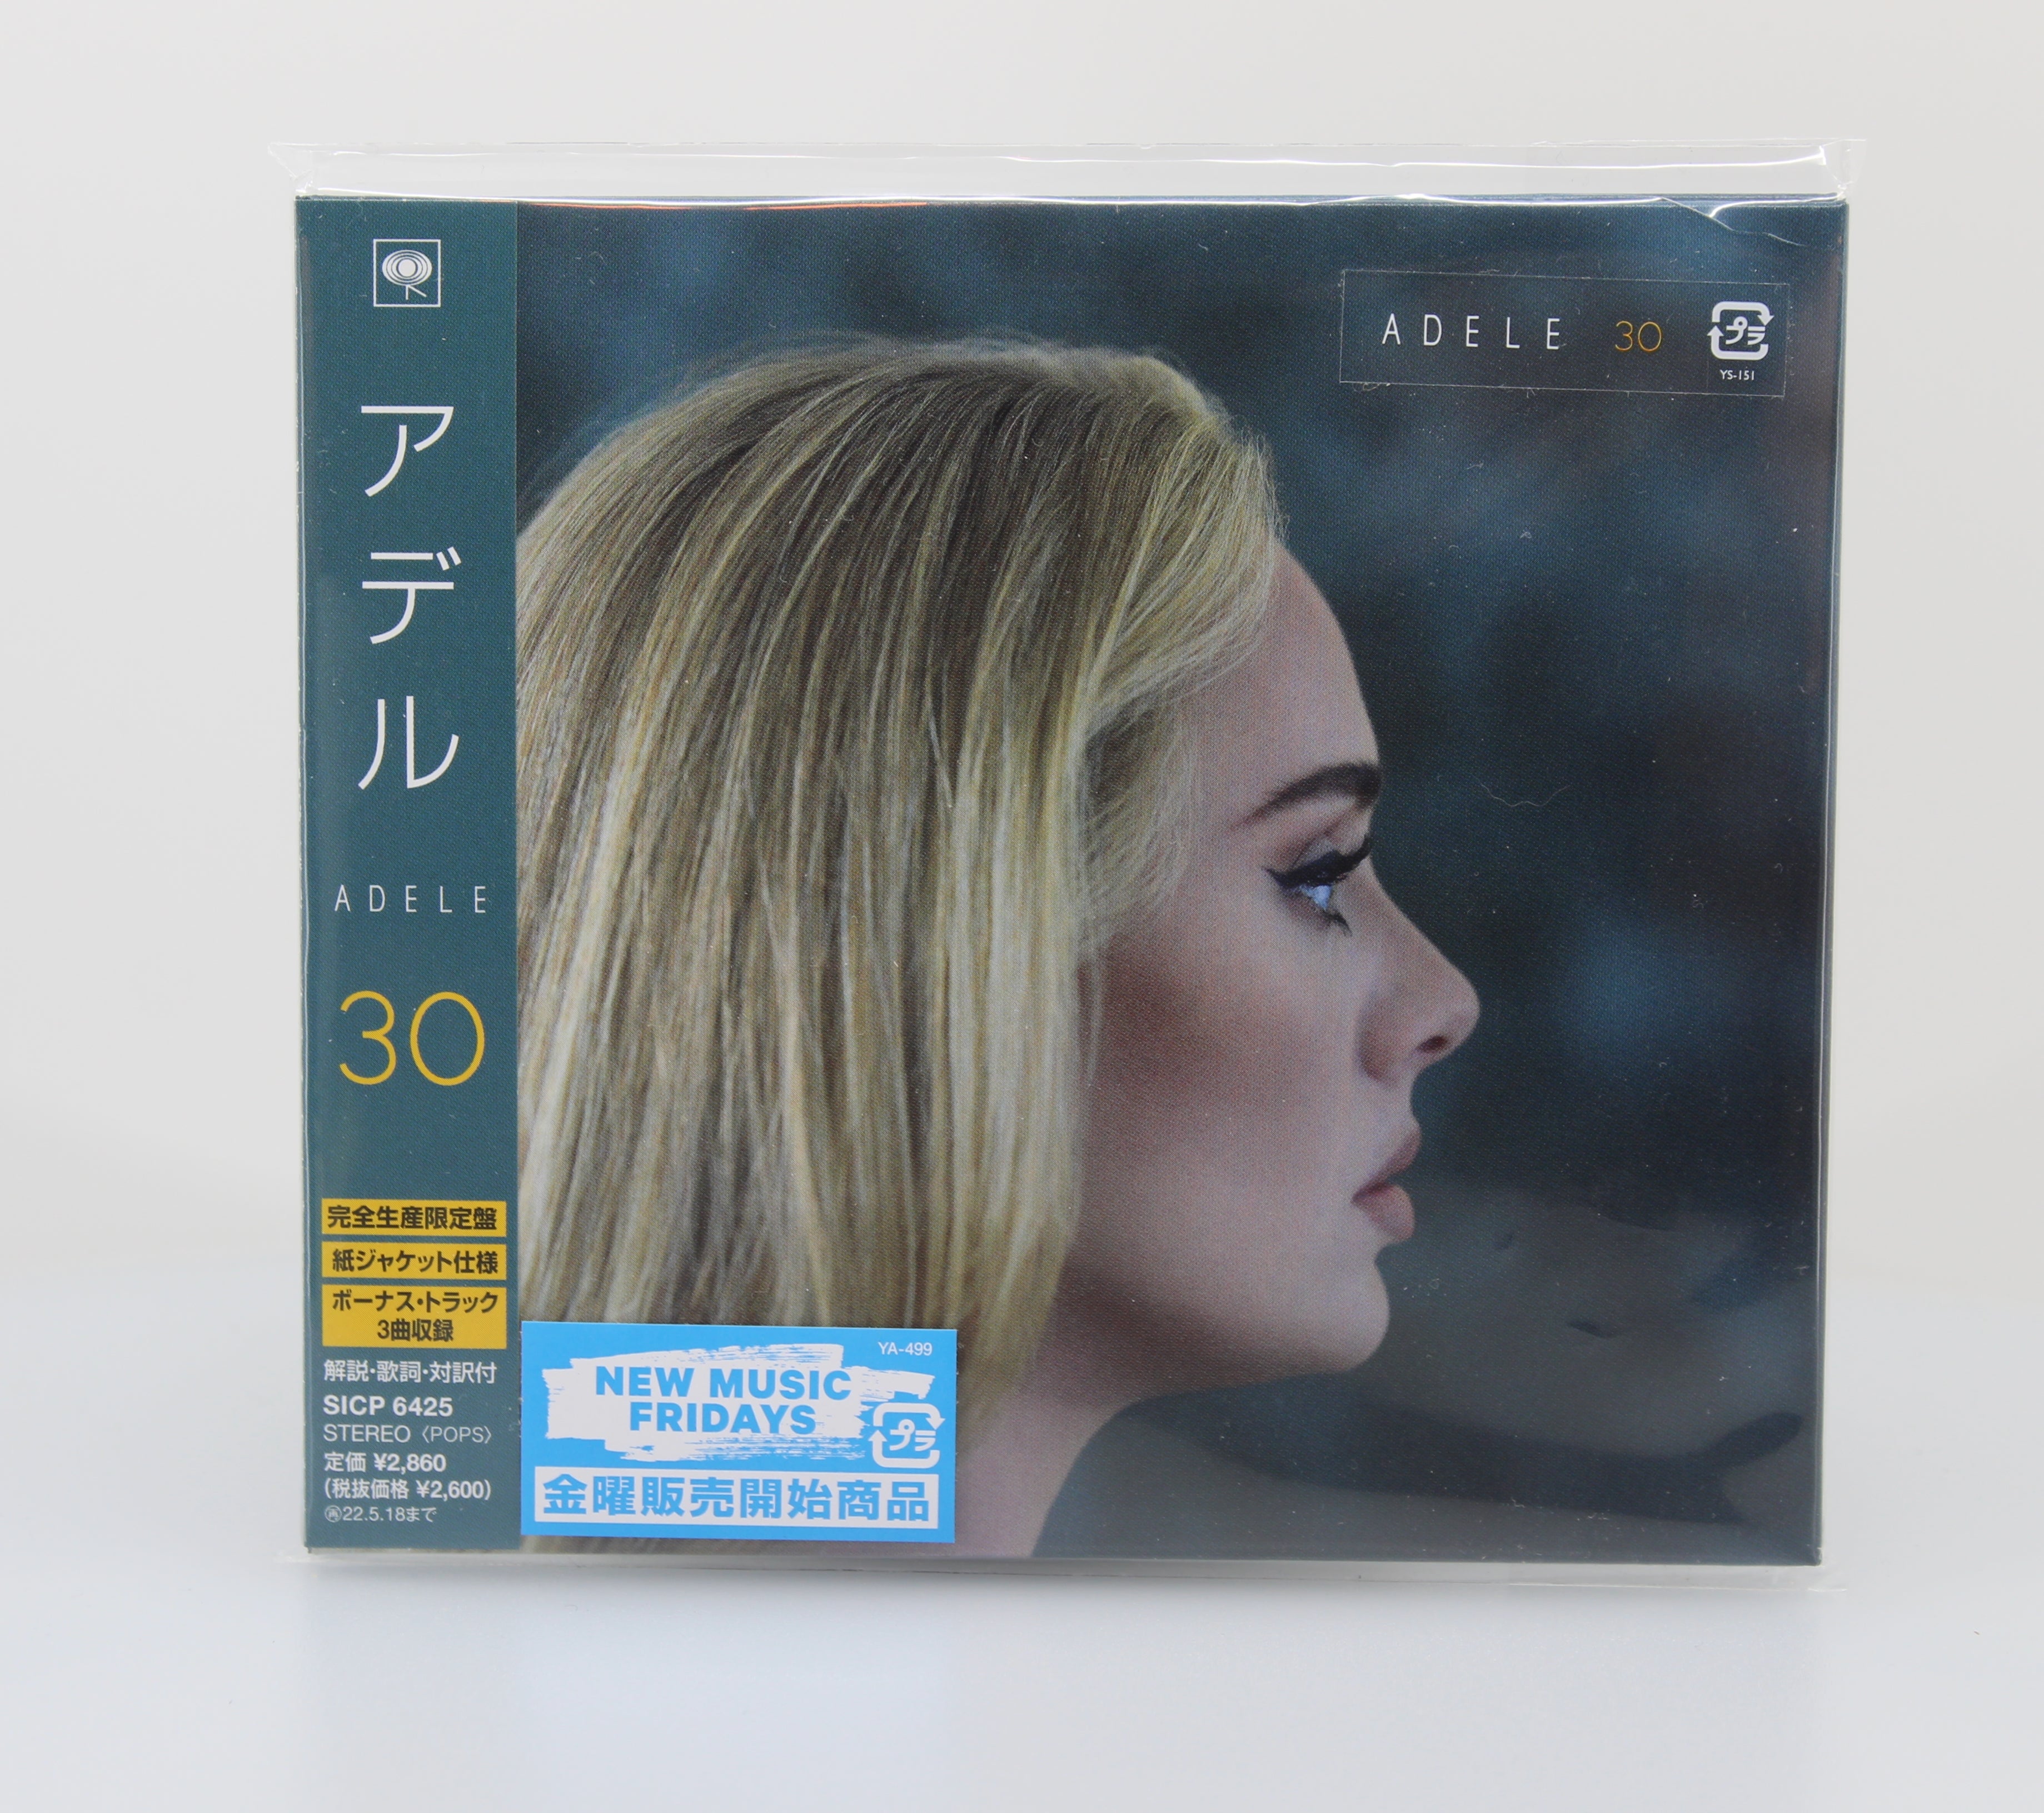 Adele, 30,CD, Album, Limited Edition mini LP. Japan 2021 